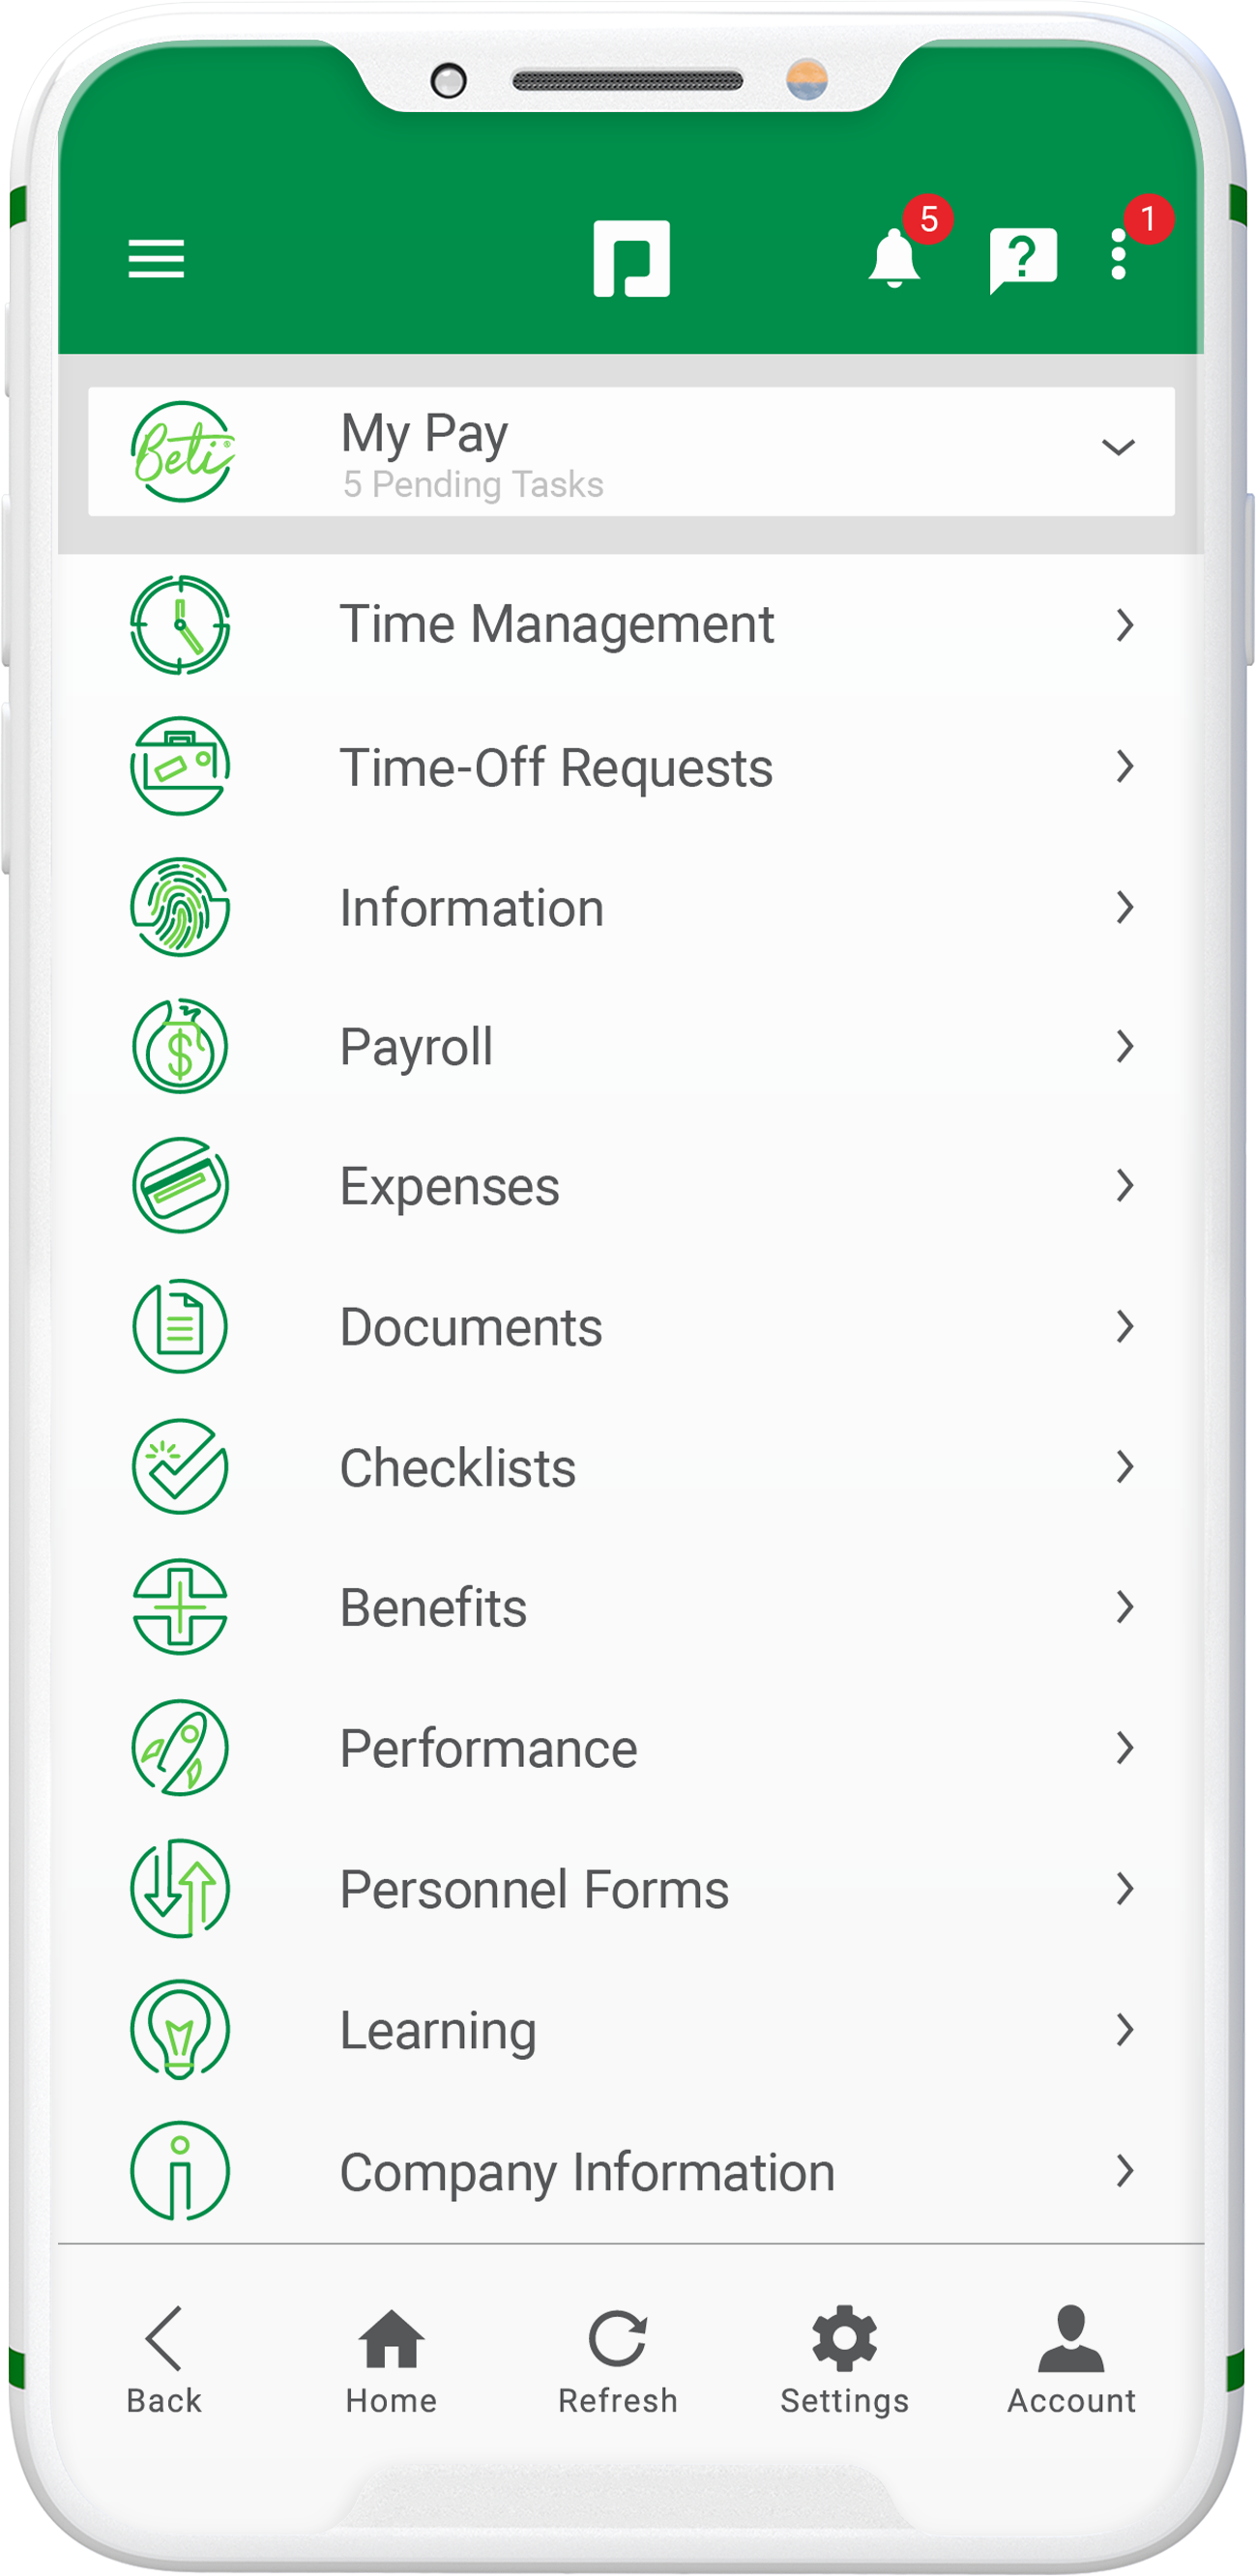 Employee Self Service portal on mobile device